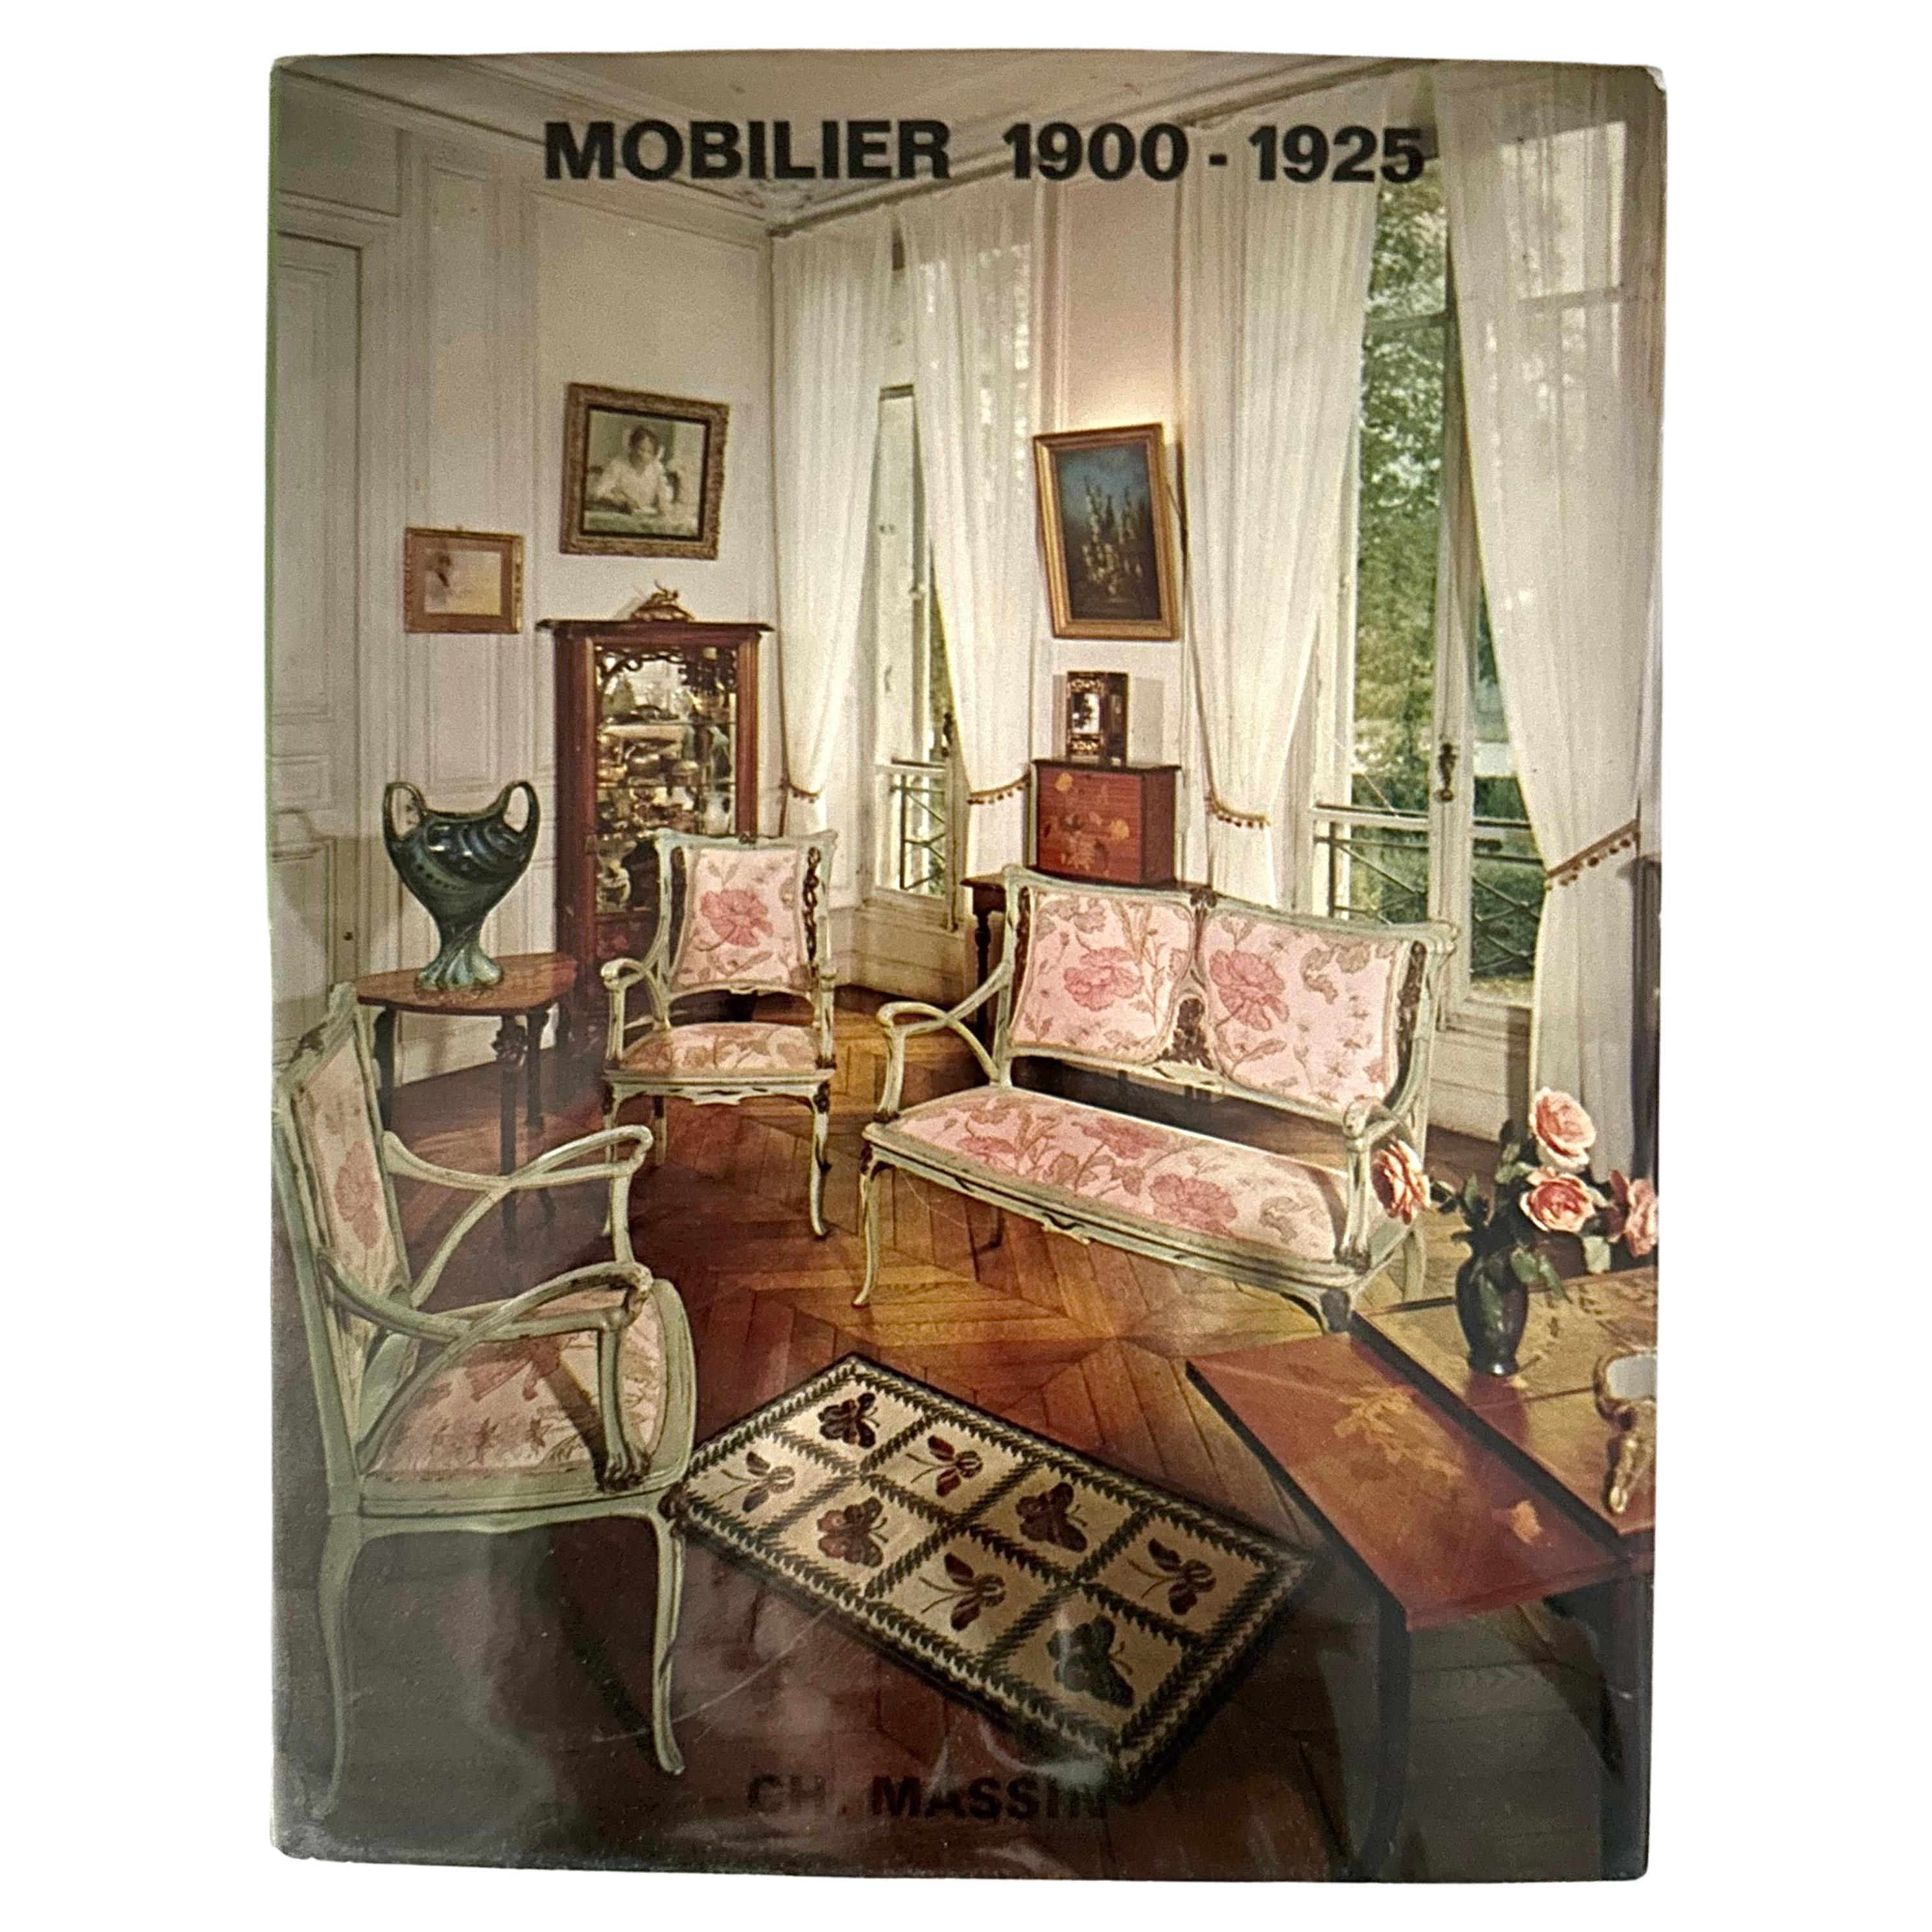 MOBILIER 1900-1925 - Edith Mannoni & Chantal Bizot - 1st ed., Paris, early 60s For Sale